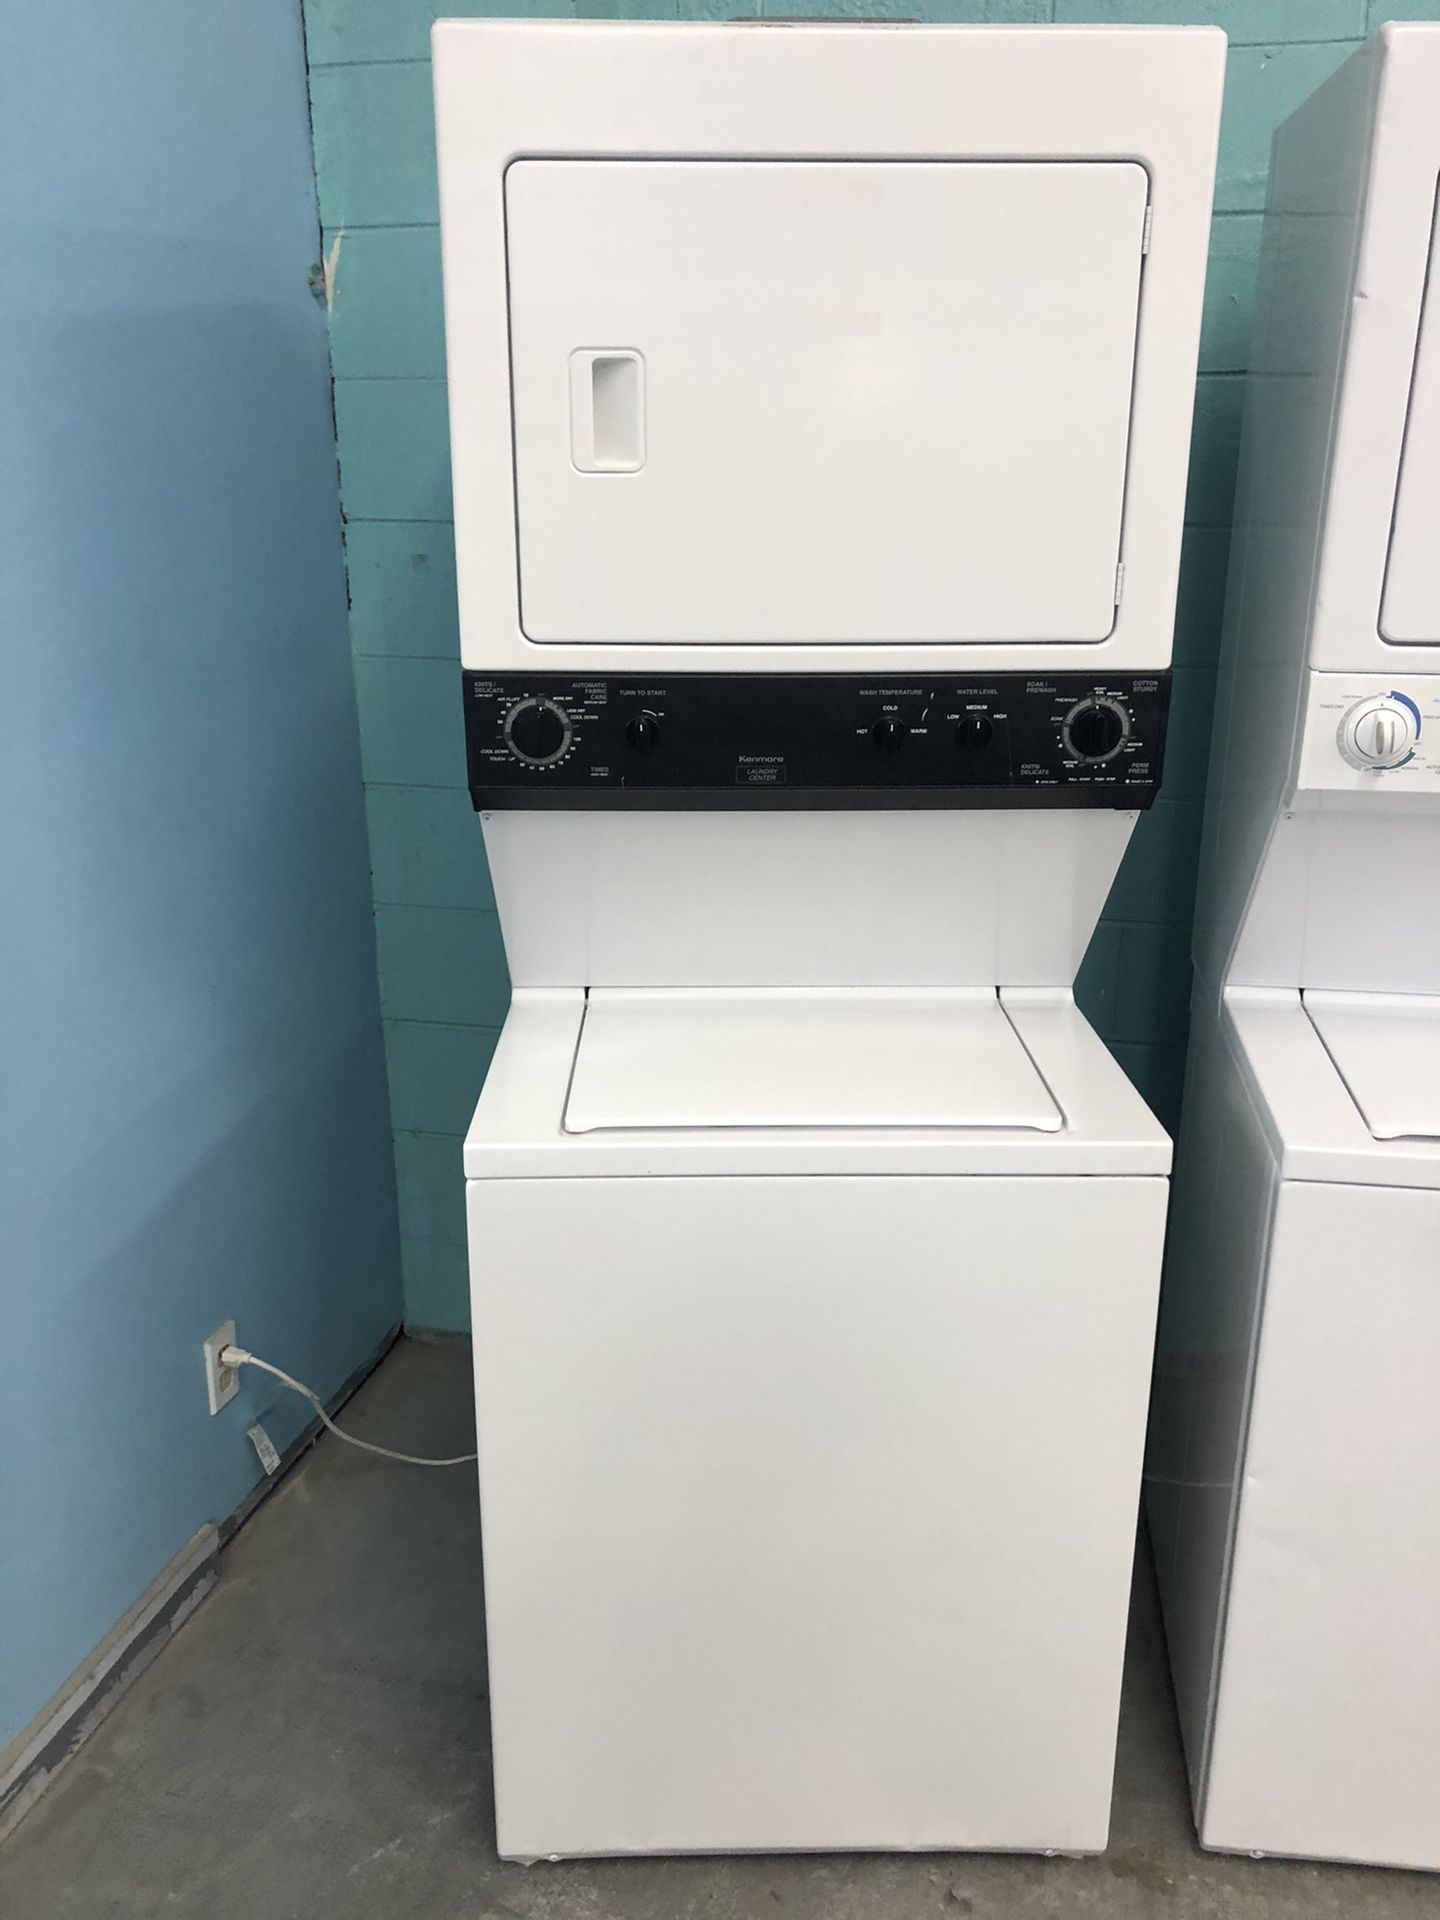 27” Wide Stack Washer Dryer